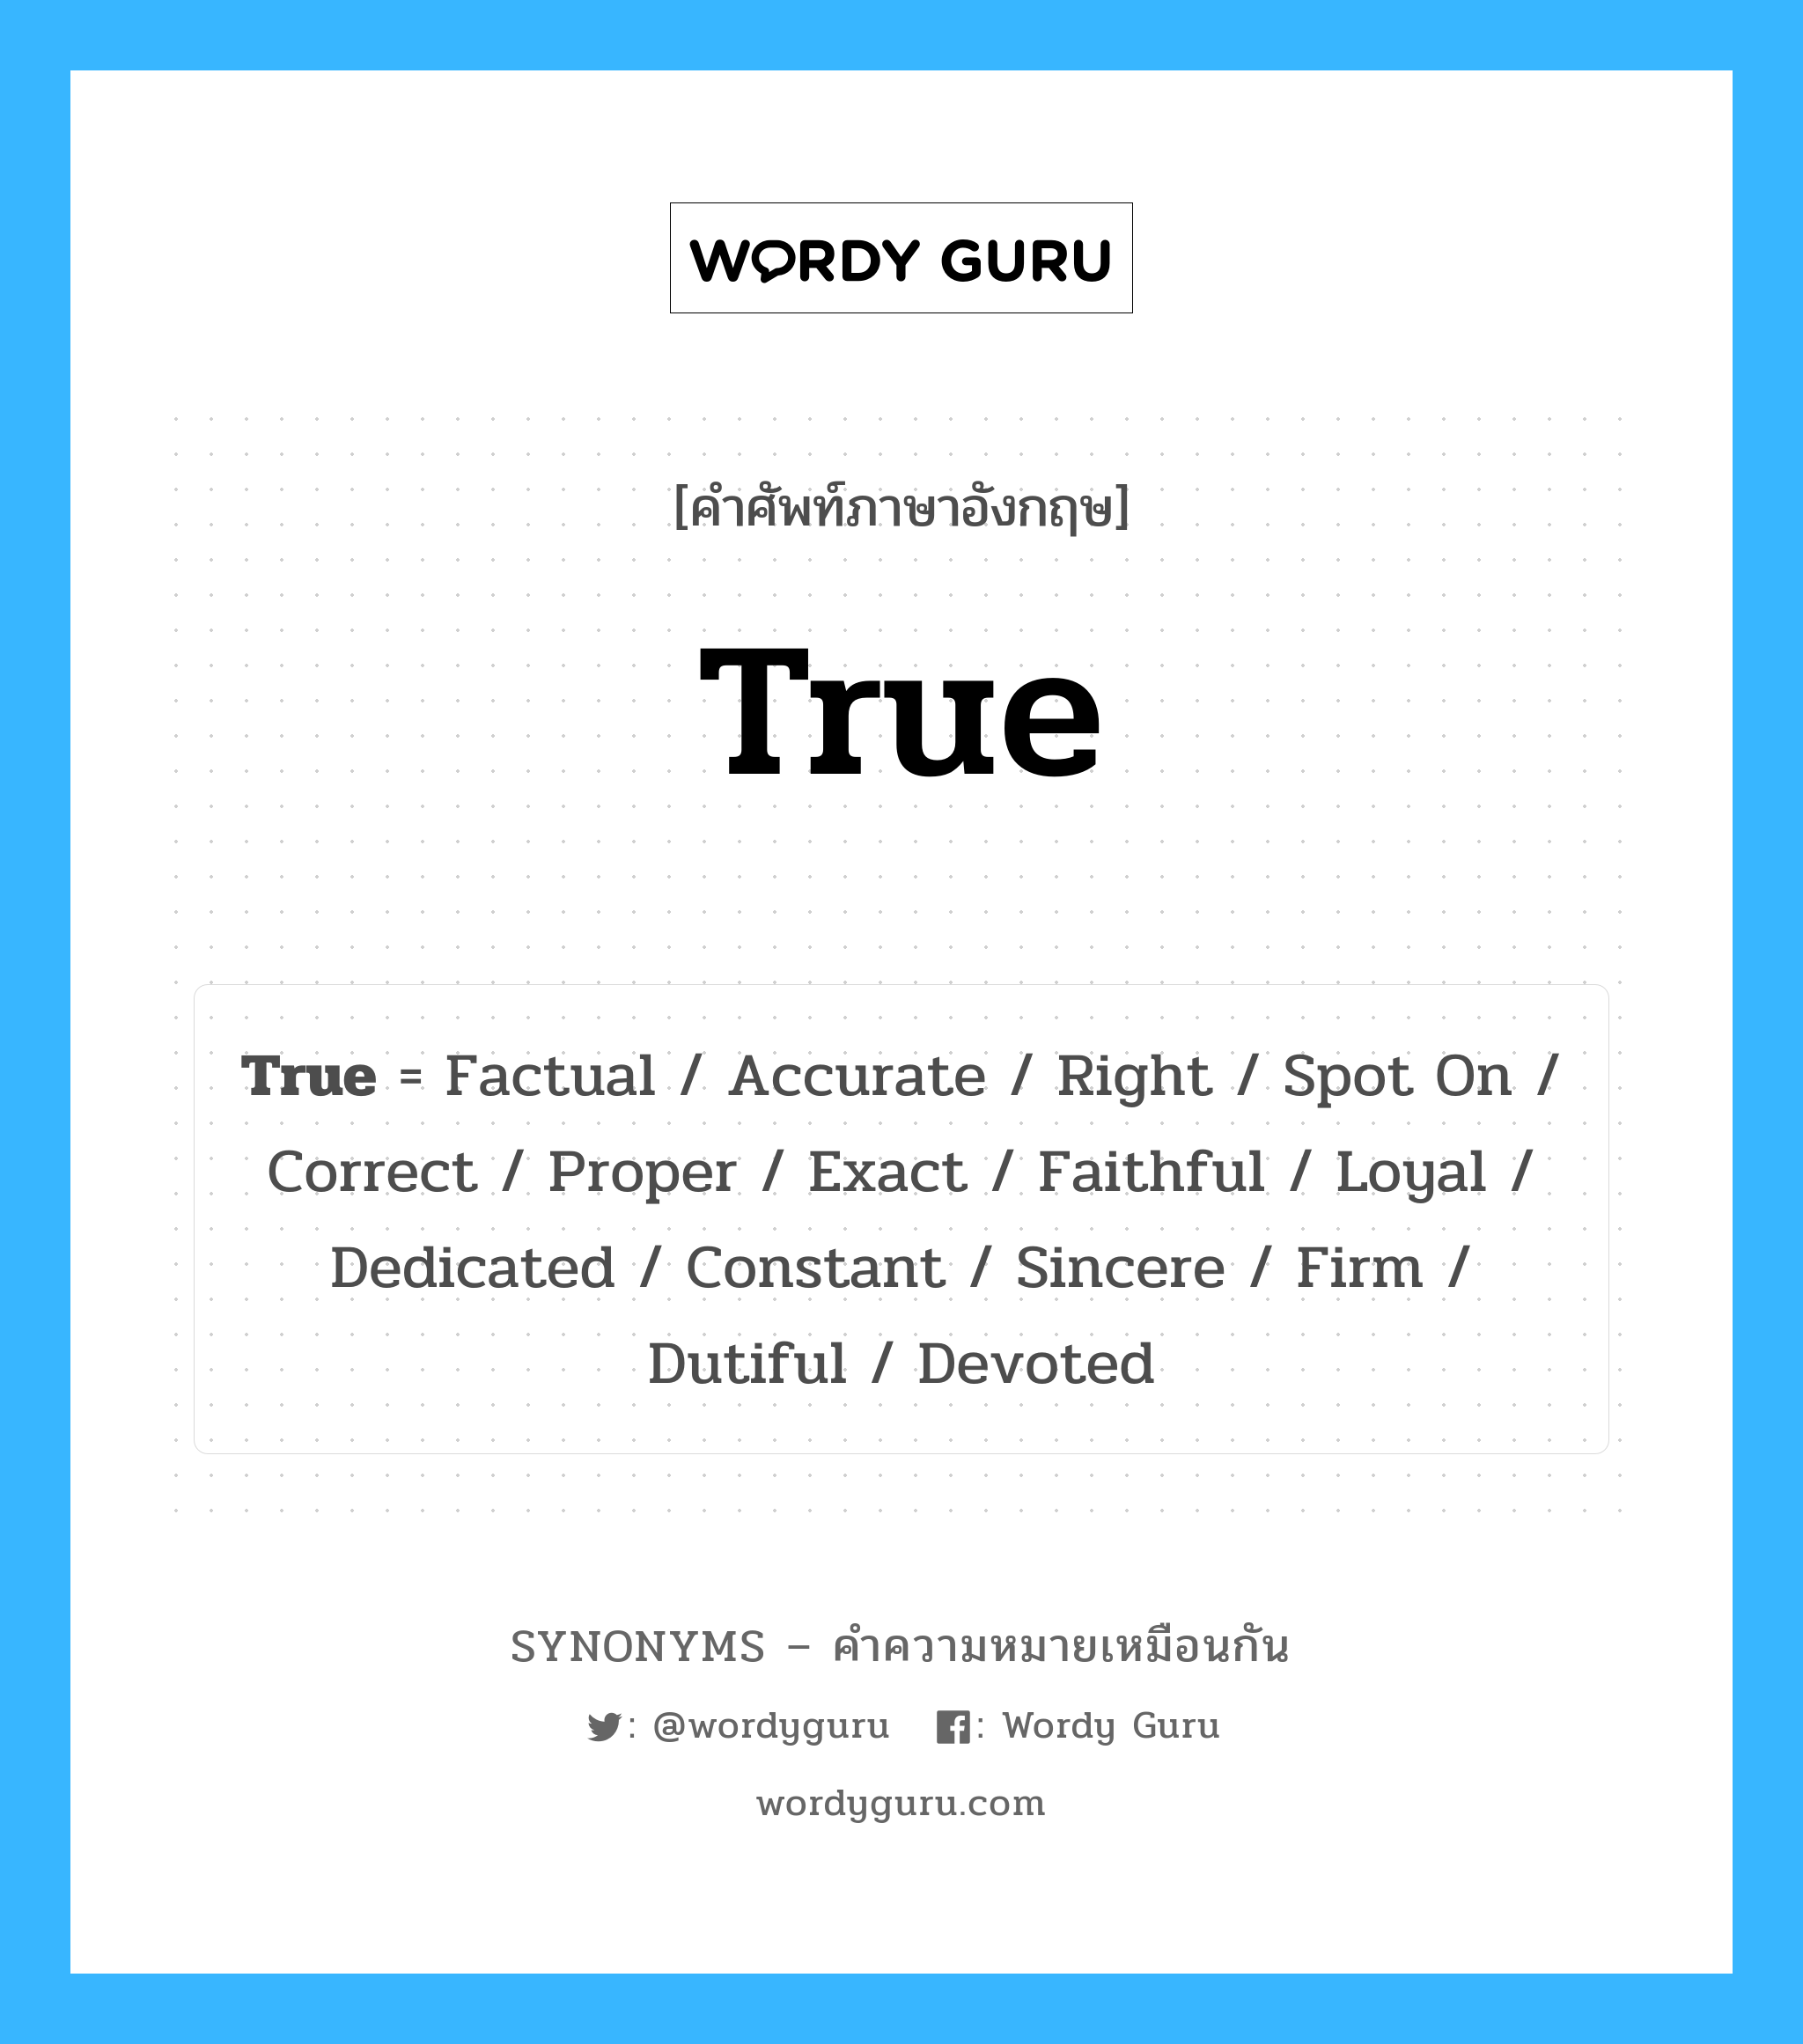 spot on เป็นหนึ่งใน true และมีคำอื่น ๆ อีกดังนี้, คำศัพท์ภาษาอังกฤษ spot on ความหมายคล้ายกันกับ true แปลว่า จุดบน หมวด true